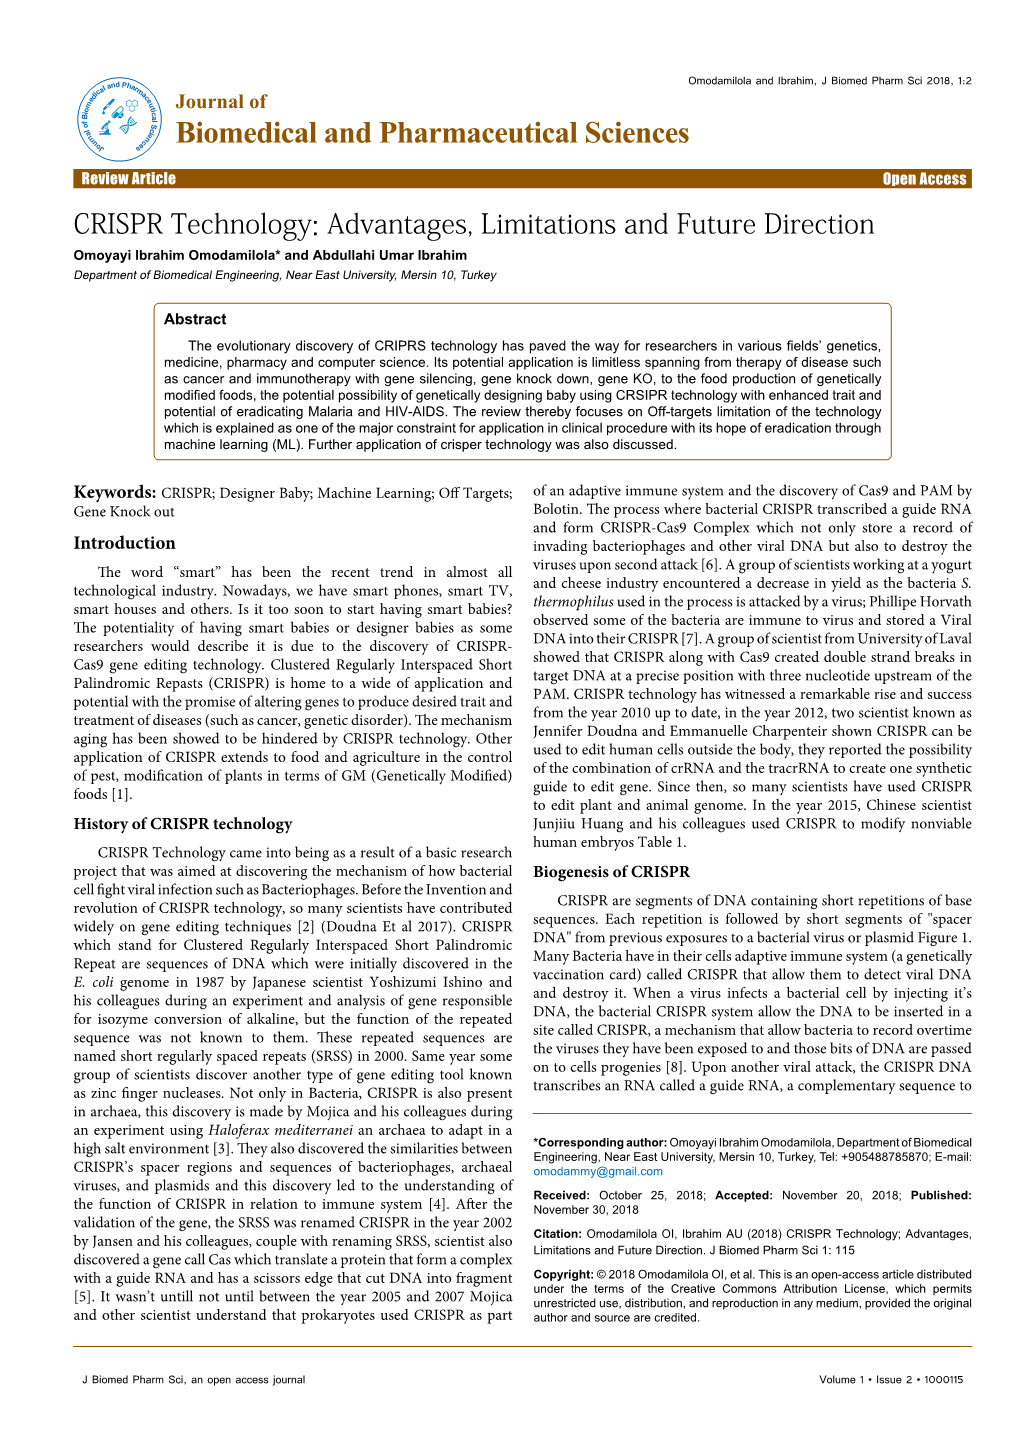 CRISPR Technology; Advantages, Limitations and Future Direction